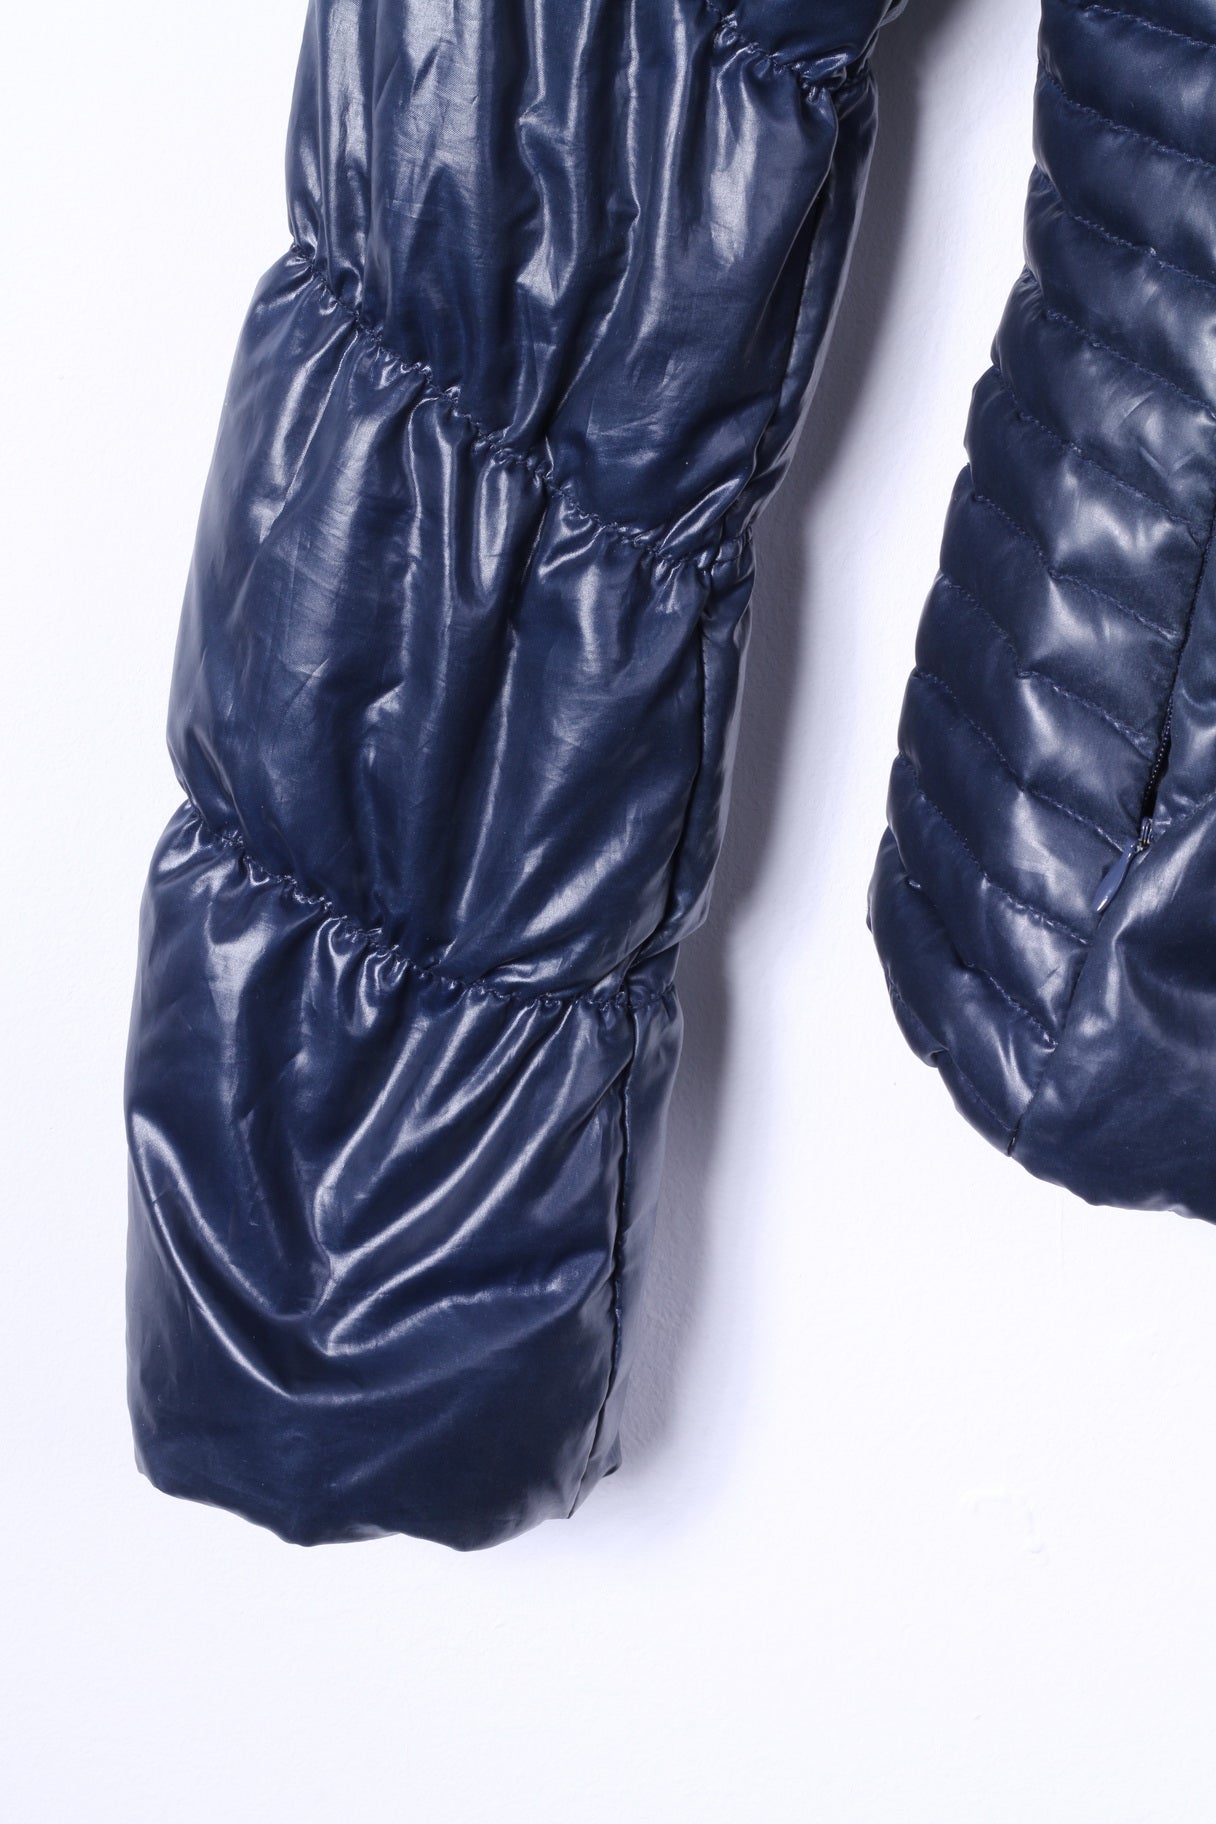 Fornarina Women M (S) Down Jacket Navy Padded Goose Warm Full Zipper Glam Top